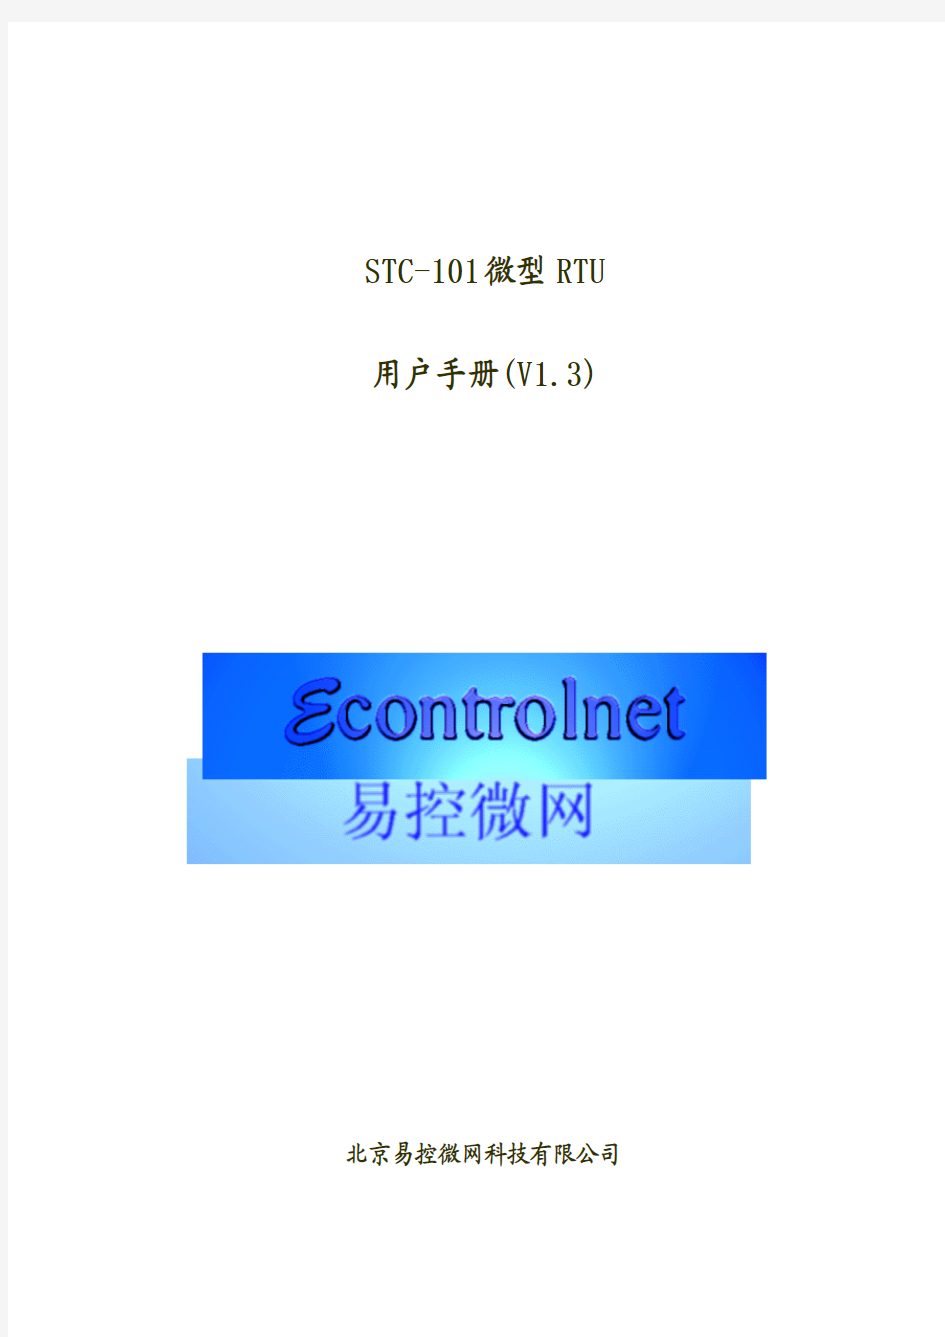 STC-101微型RTU用户手册